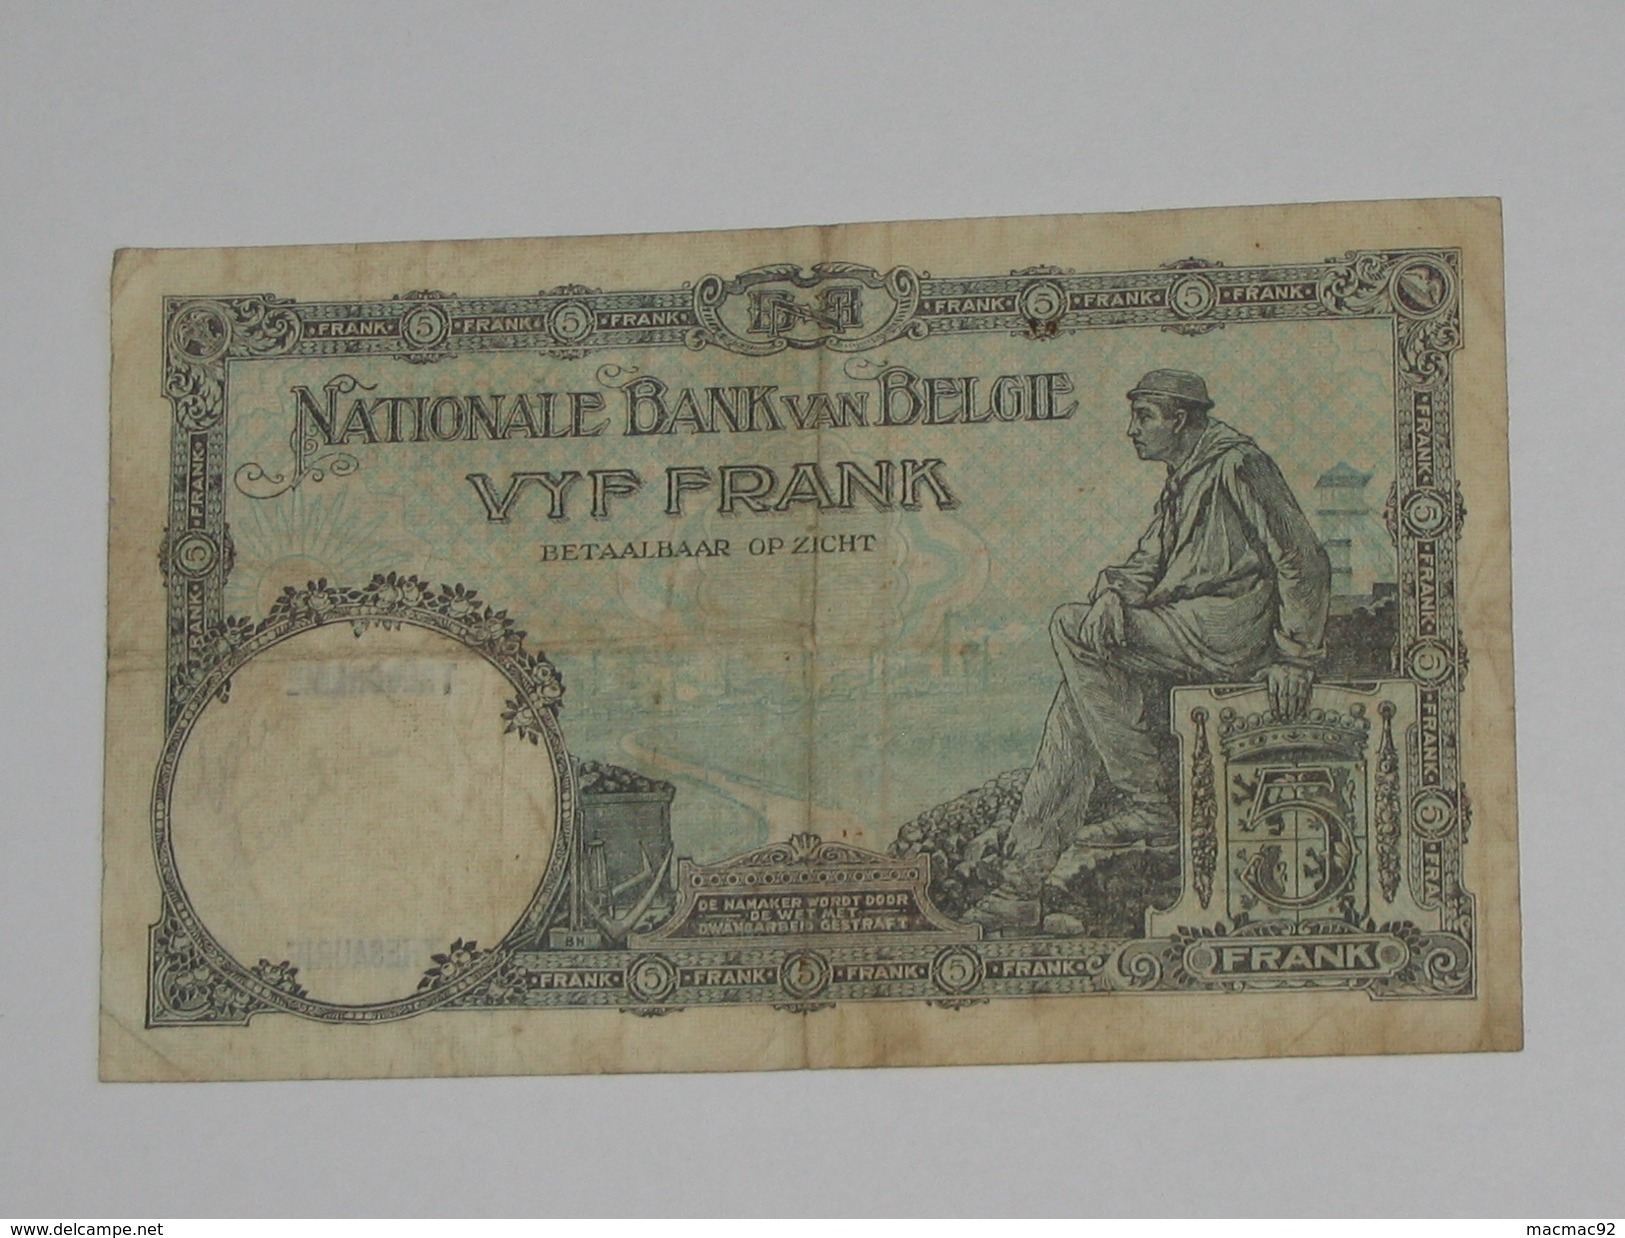 5 Francs - VYF FRANK - Banque Nationale De Belgique - 1931  **** EN ACHAT IMMEDIAT **** - 5 Franchi